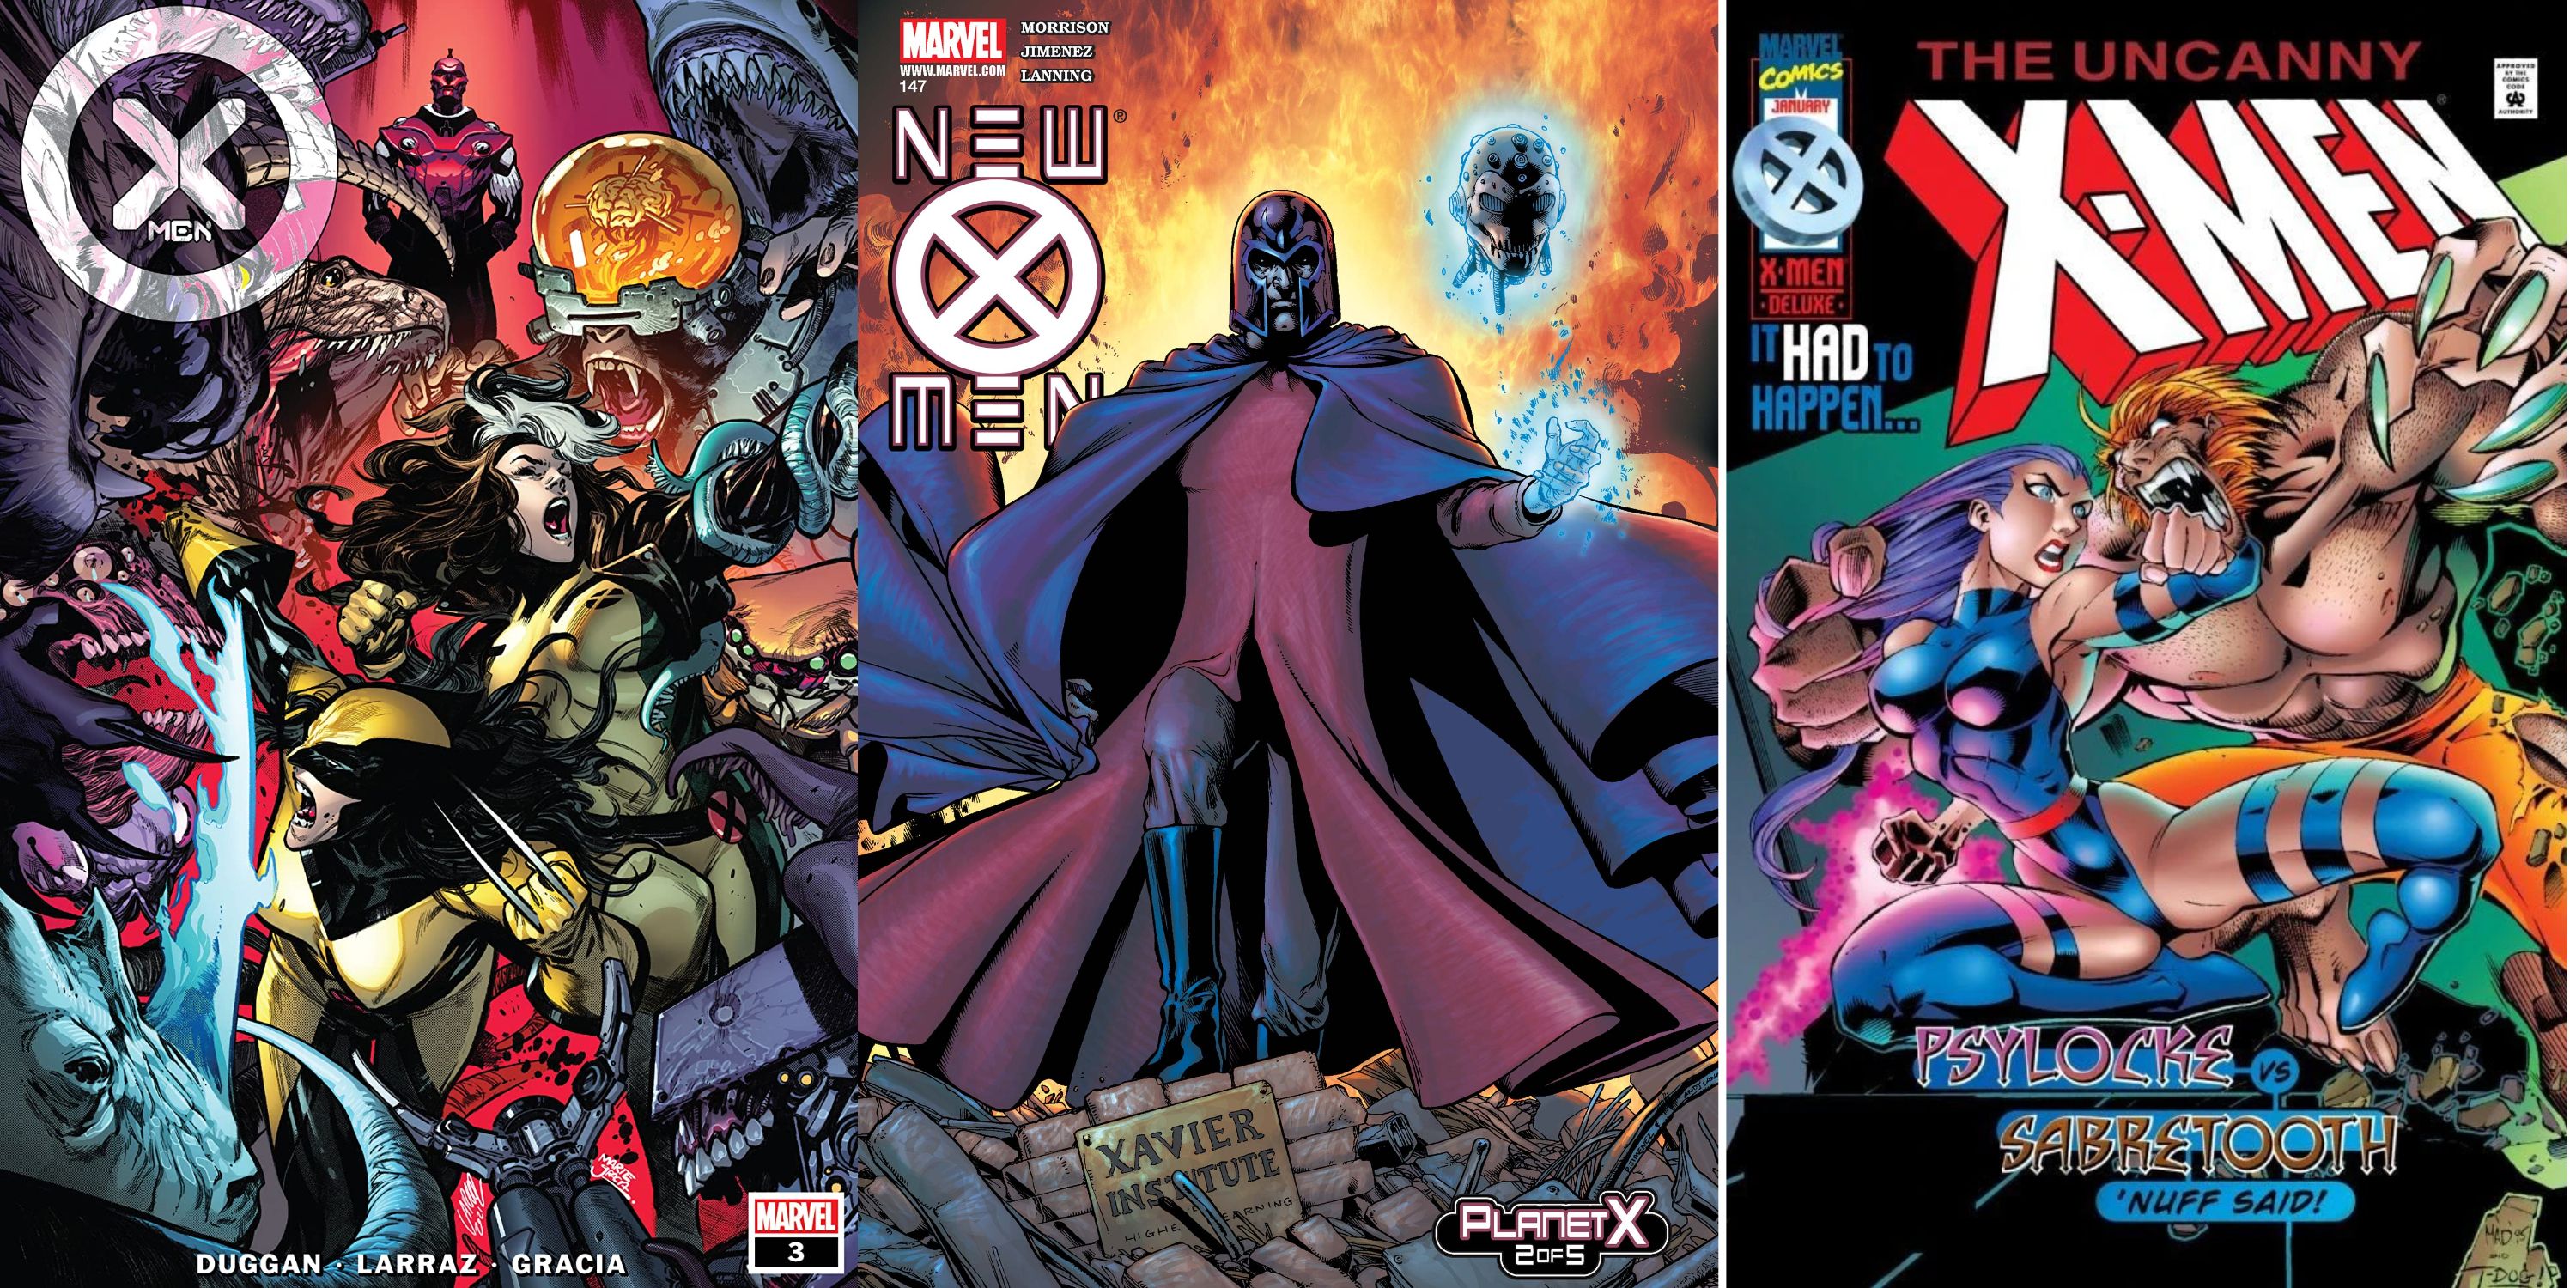 A split image of the covers to X-Men Vol. 6 #3, New X-Men #146, and Uncanny X-Men Vol. 1 #328 from Marvel Comics